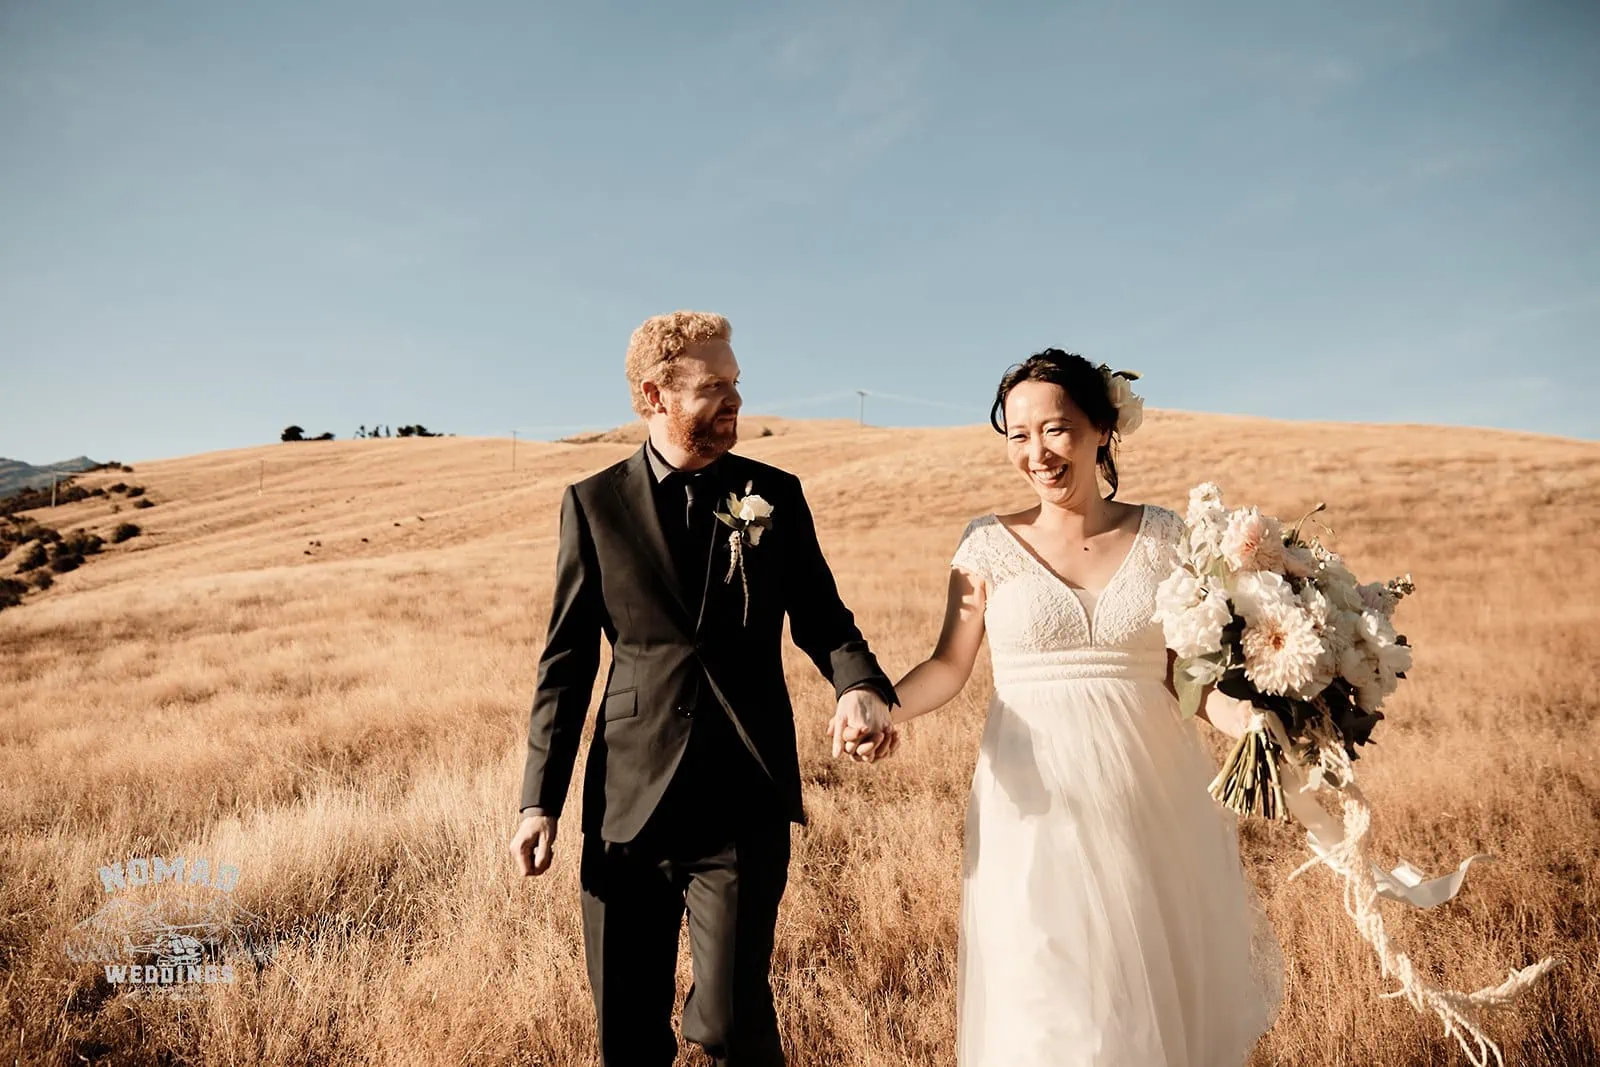 Queenstown New Zealand Elopement Wedding Photographer - A couple walking through a grassy field in Queenstown during the summer.